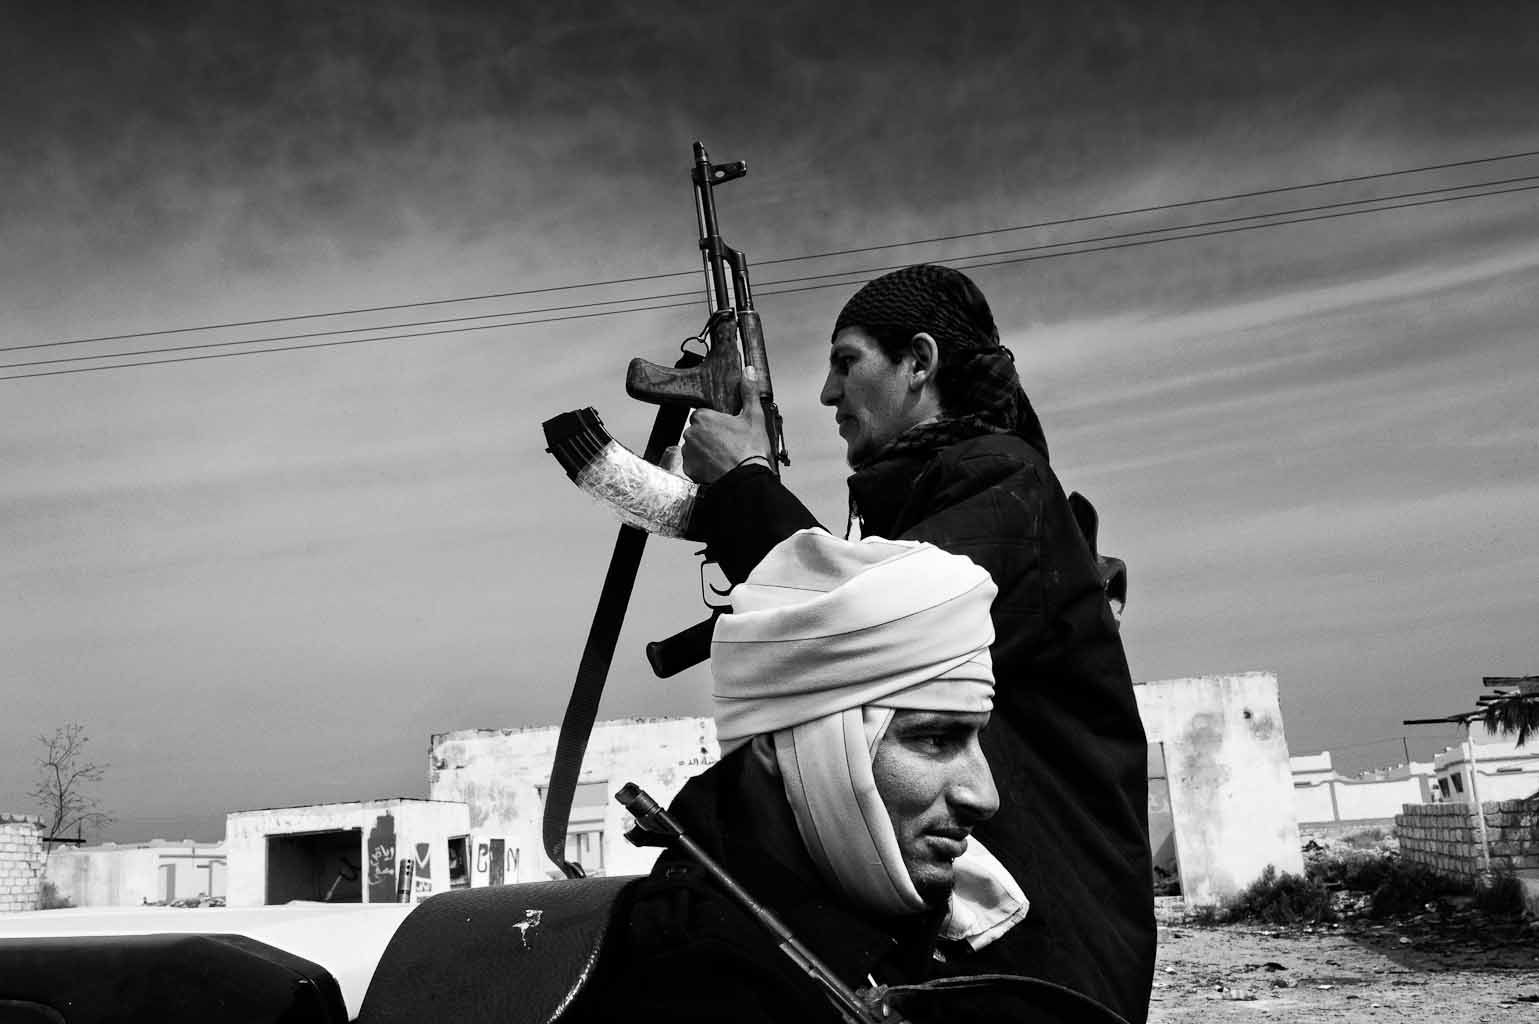 Libya  March-April 2011
Ras Lanuf  rebel on the frontline